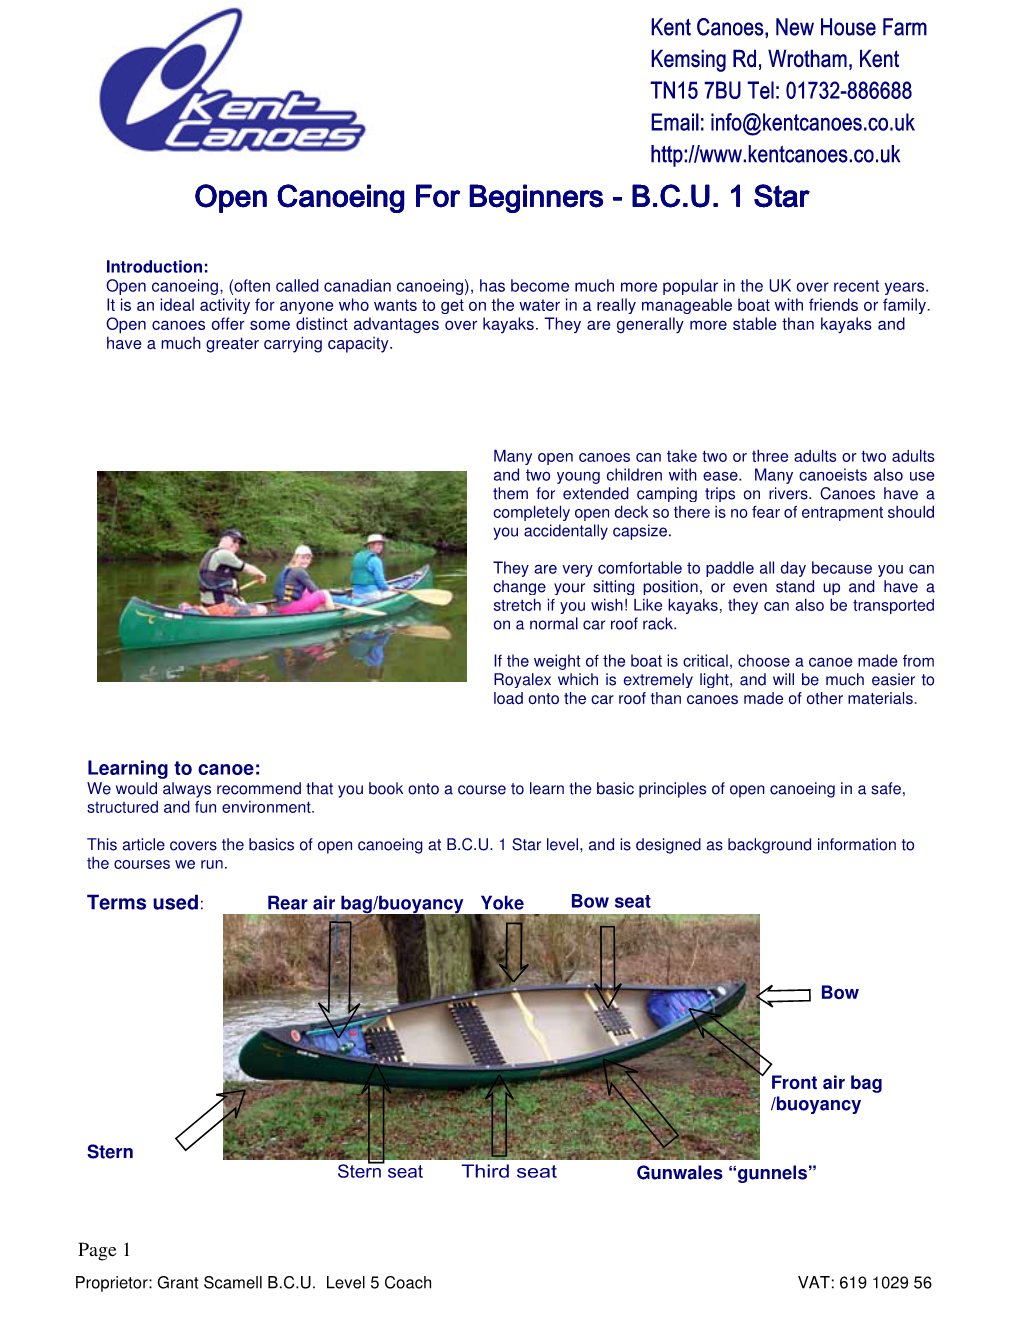 Open Canoeing for Beginners - B.C.U